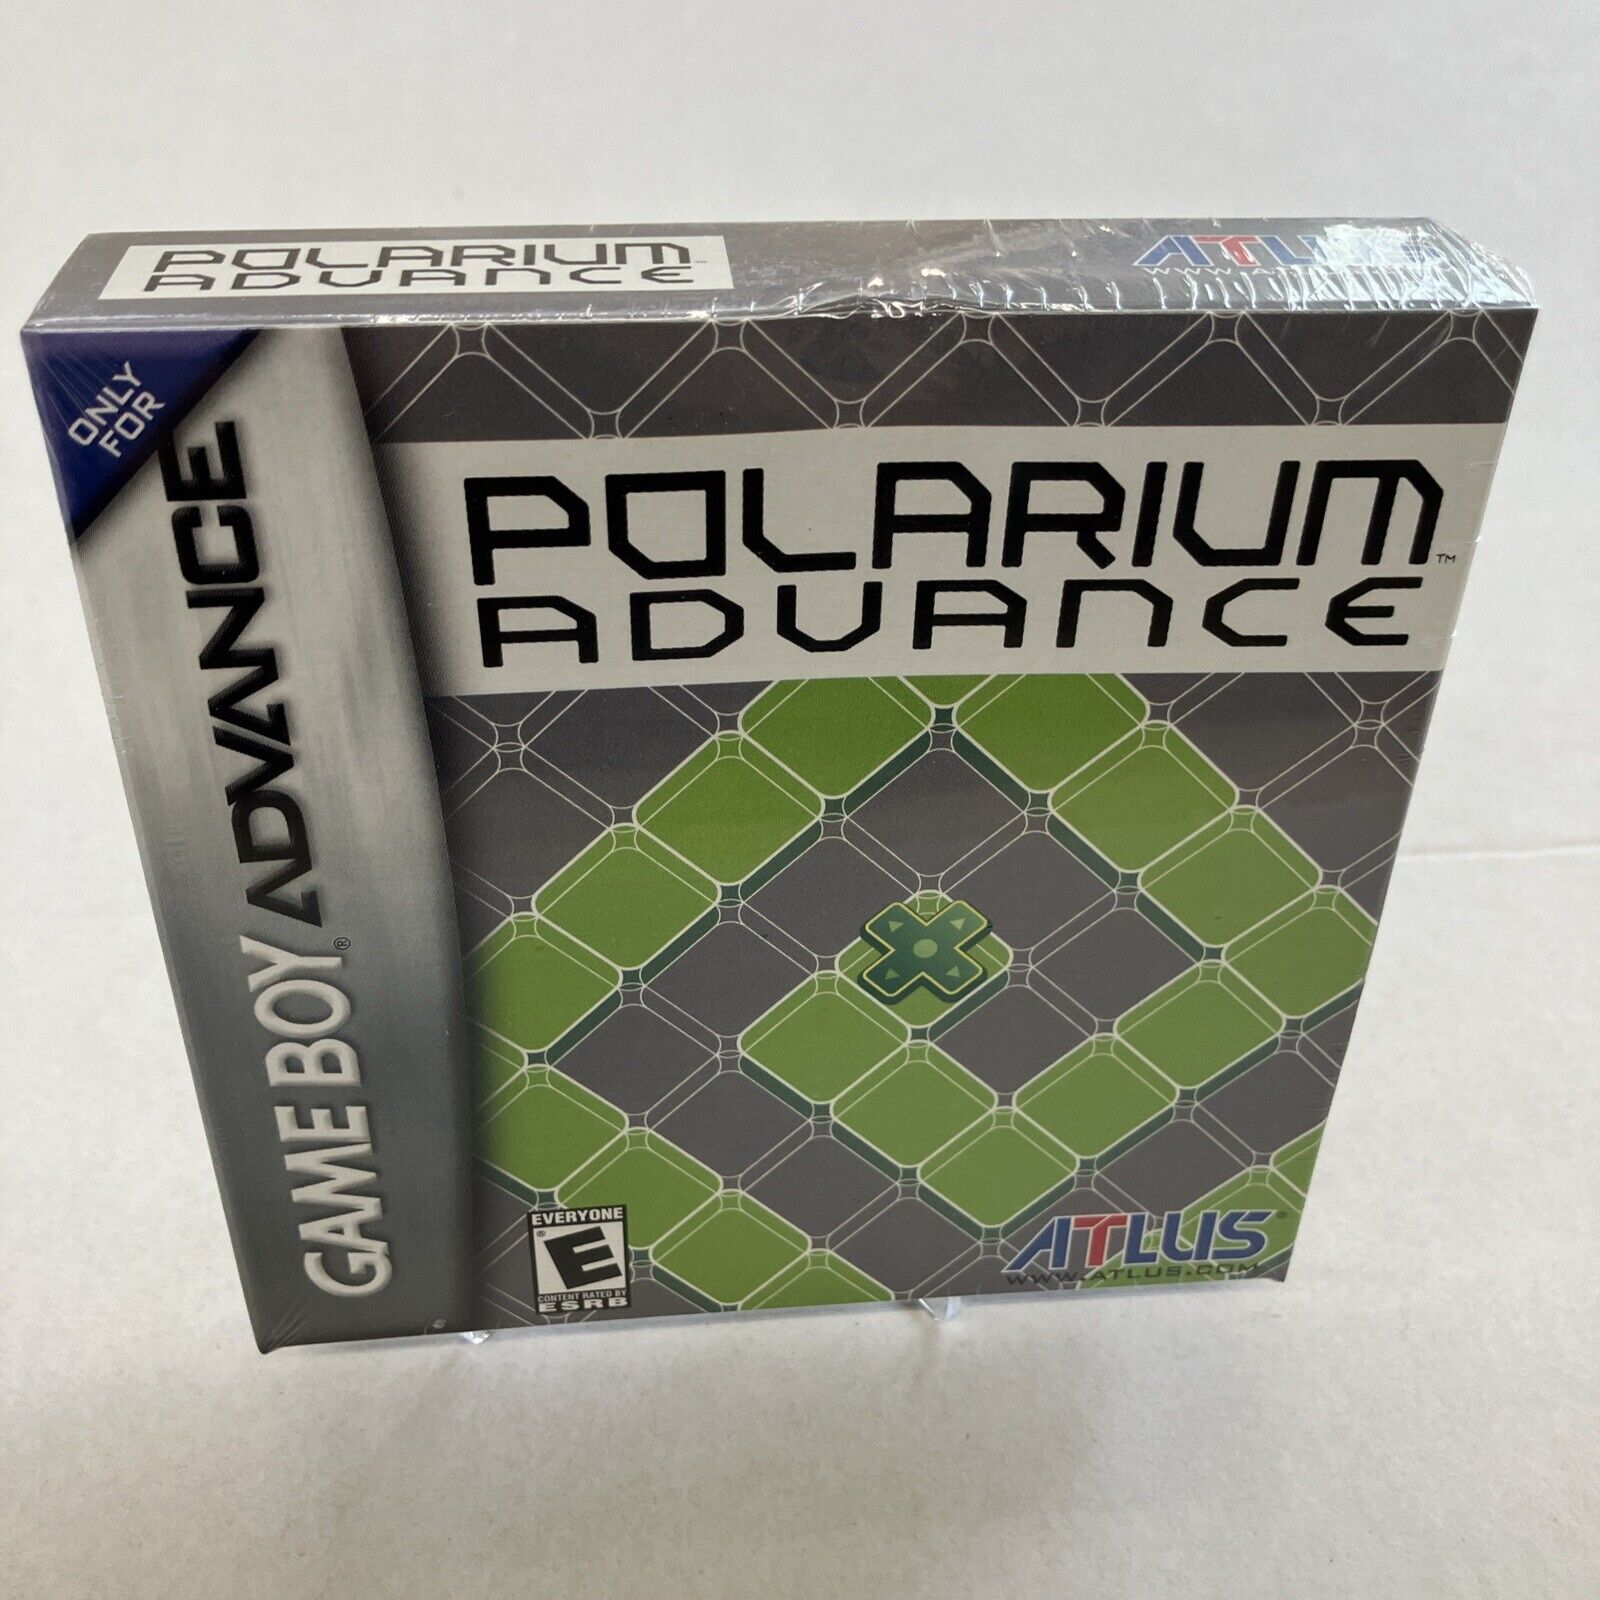 Polarium Advance (Nintendo Game Boy Advance, 2006) GBA New Factory Sealed Atlus